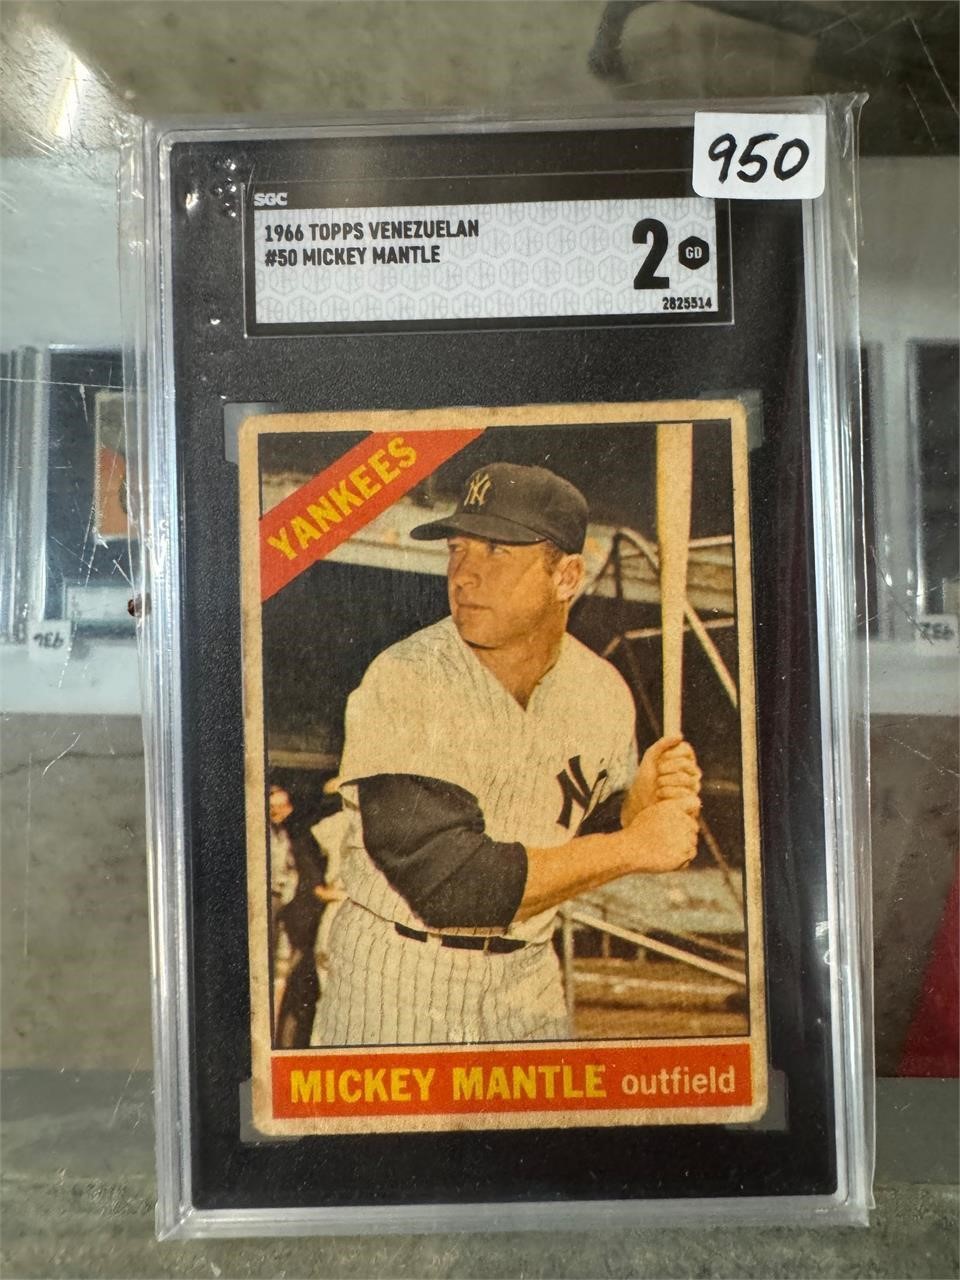 1966 Topps Venezuelan- Mickey Mantle